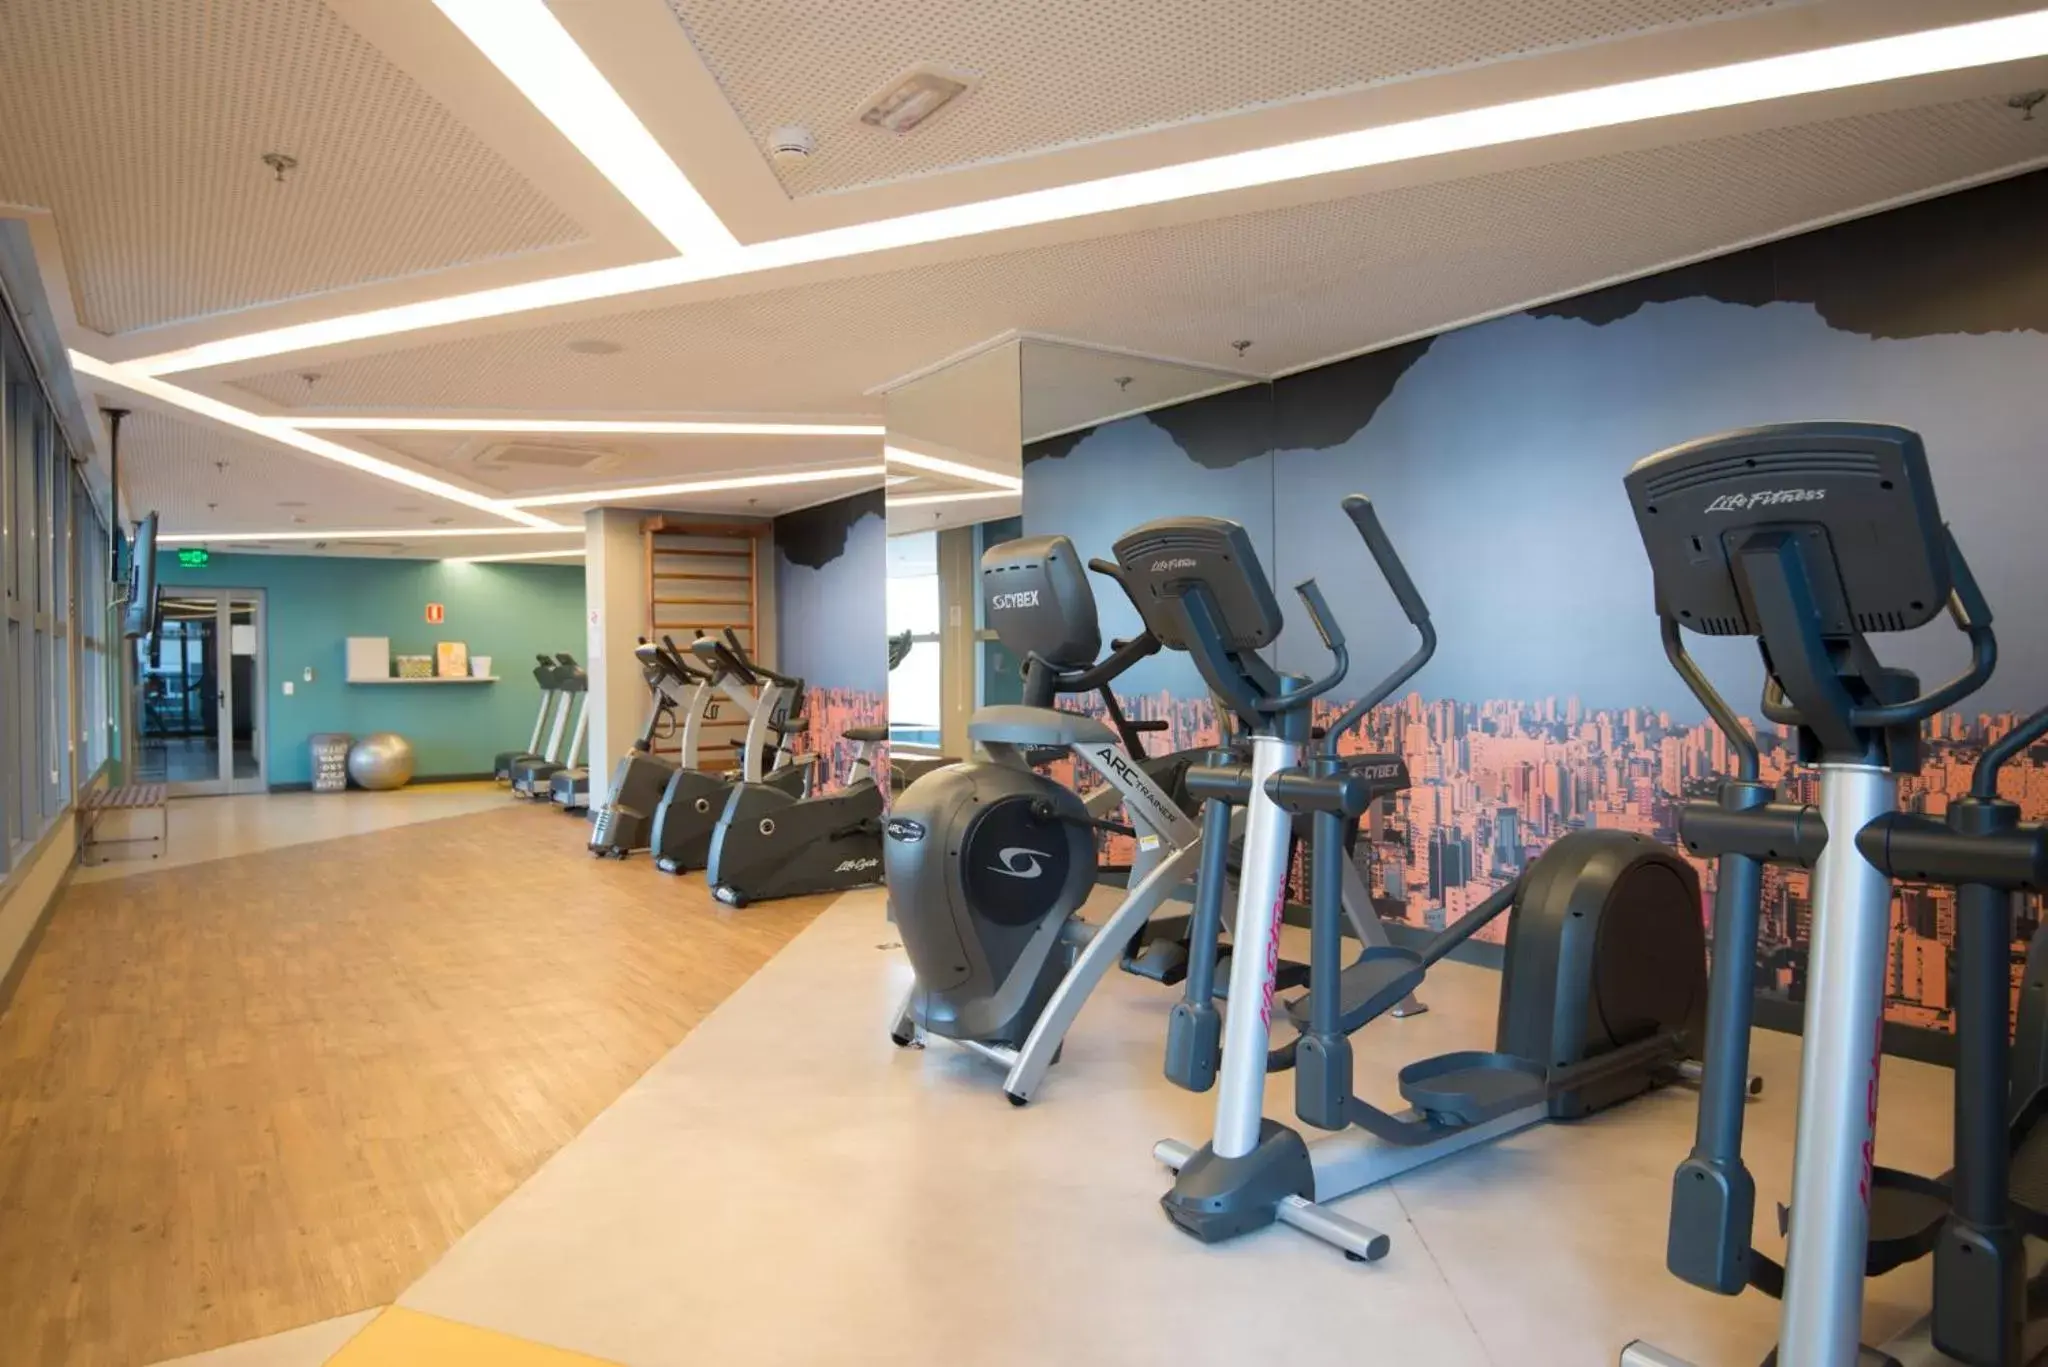 Fitness centre/facilities, Fitness Center/Facilities in Novotel São Paulo Berrini